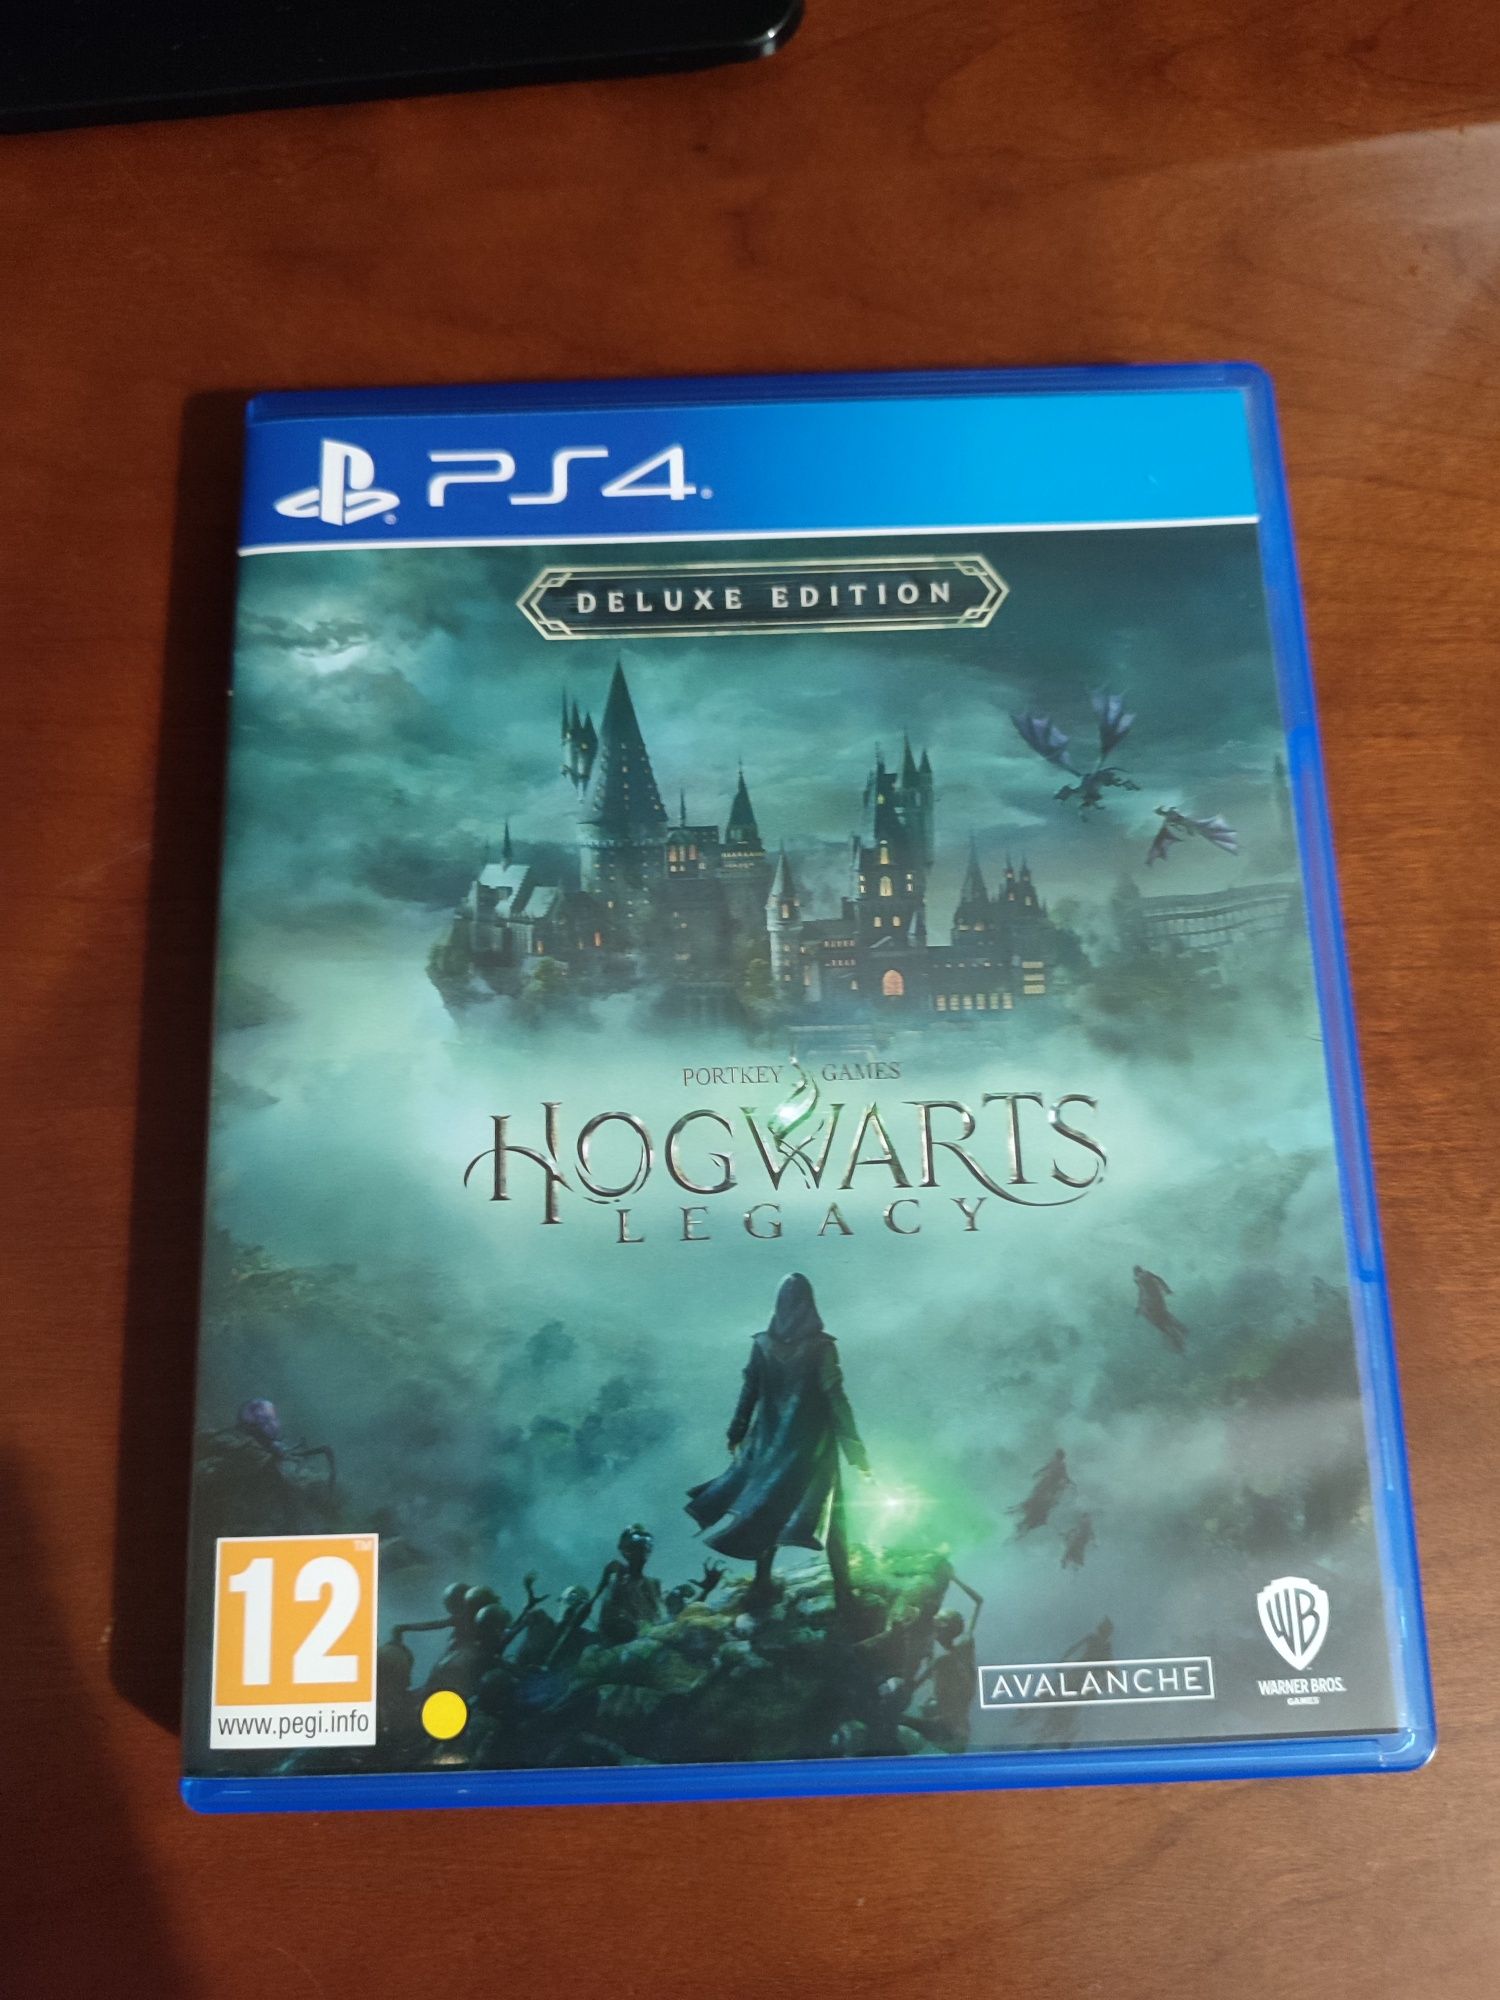 Hogwarts legacy Deluxe Edition PS4 Custóias, Leça Do Balio E